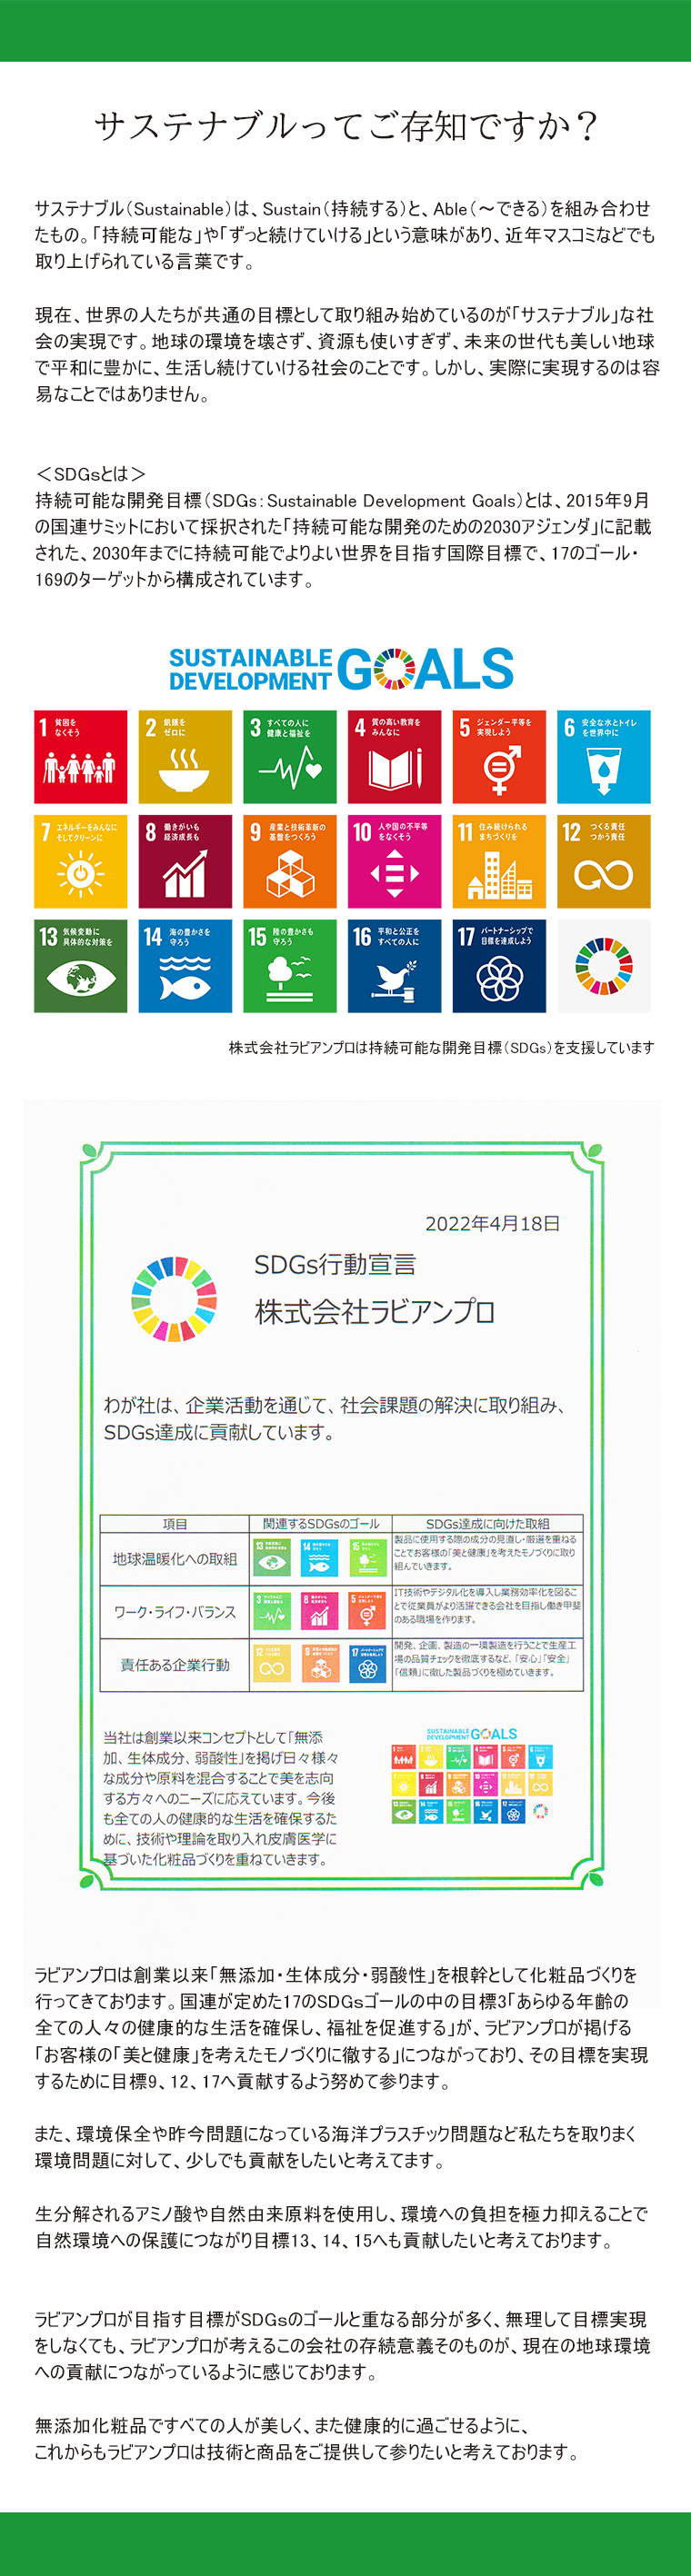 20220623 SDGsページ.jpg